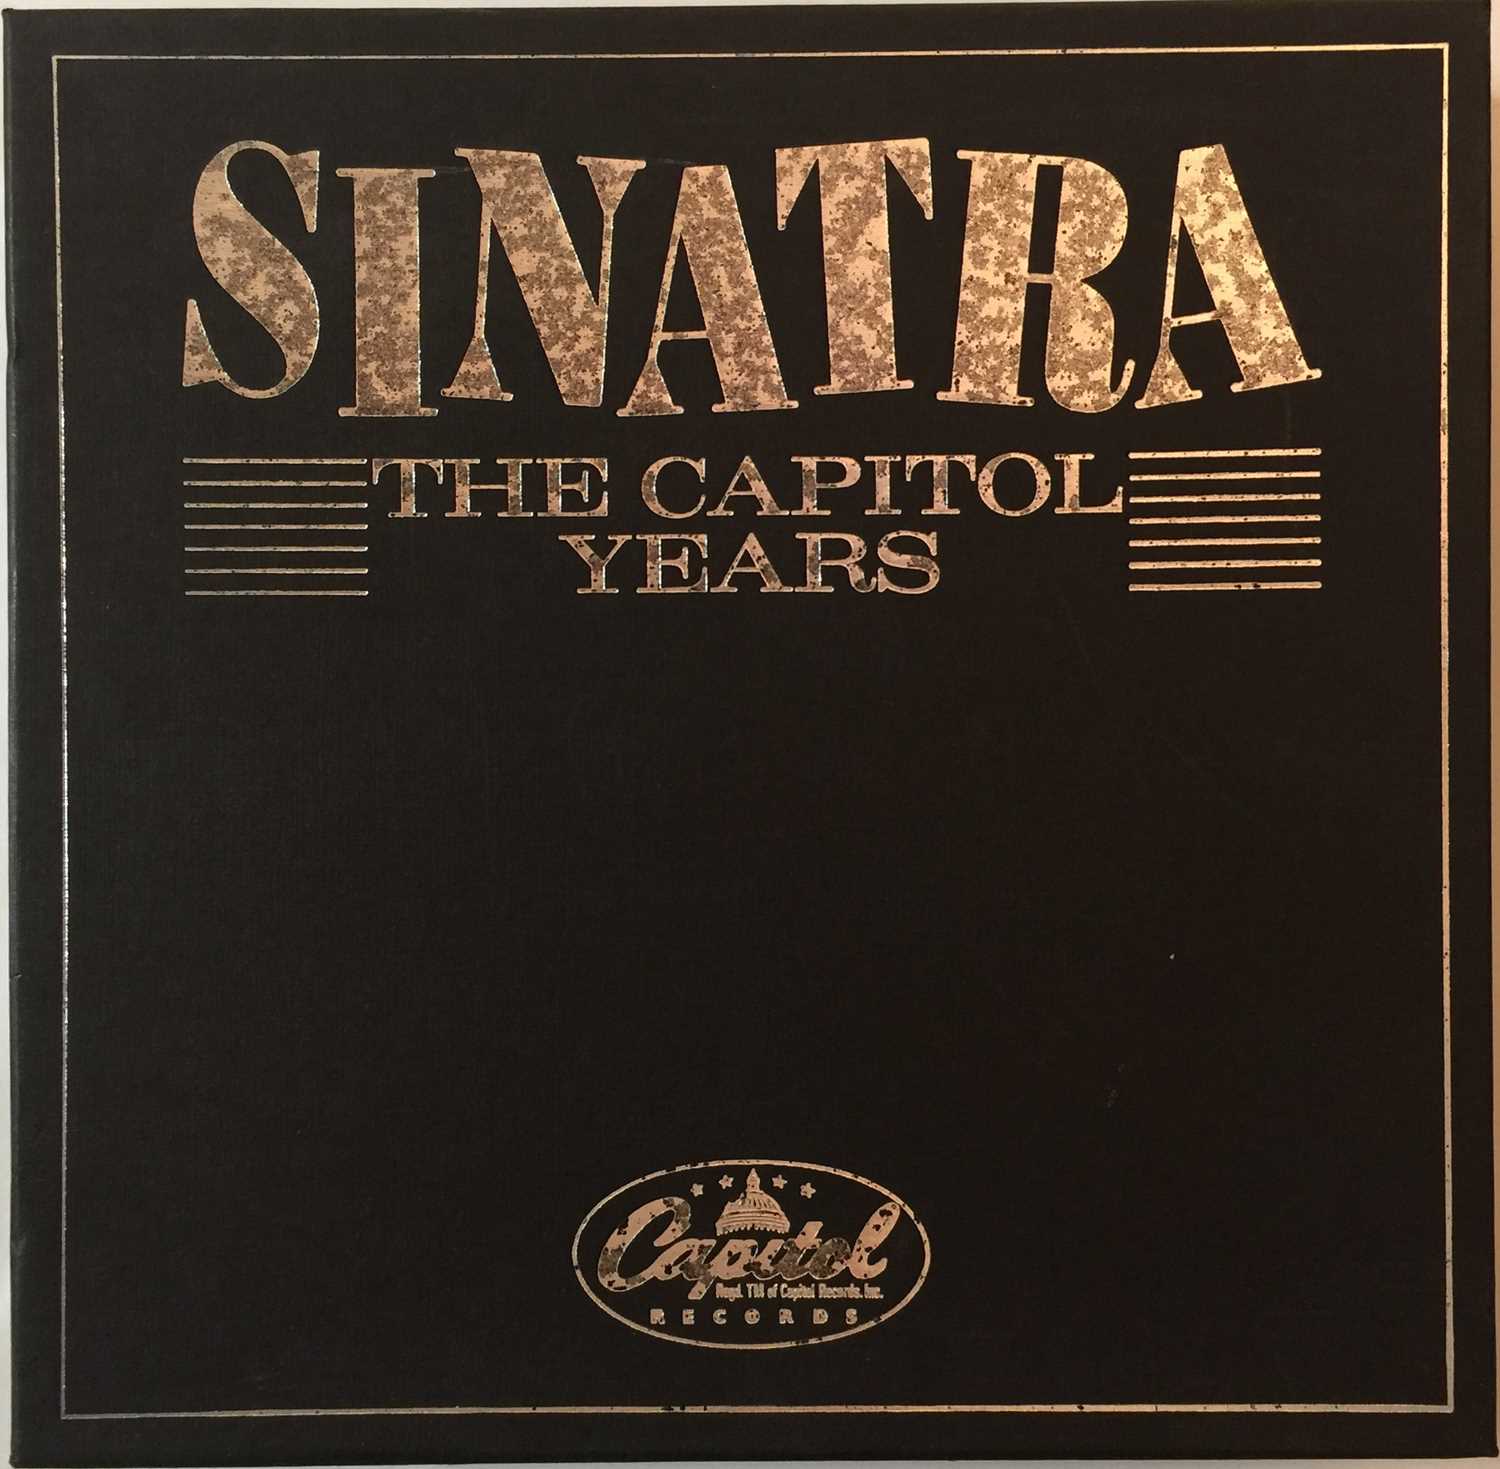 Lot 255 - FRANK SINATRA - THE CAPITOL YEARS LP BOX SET (SINATRA 20)